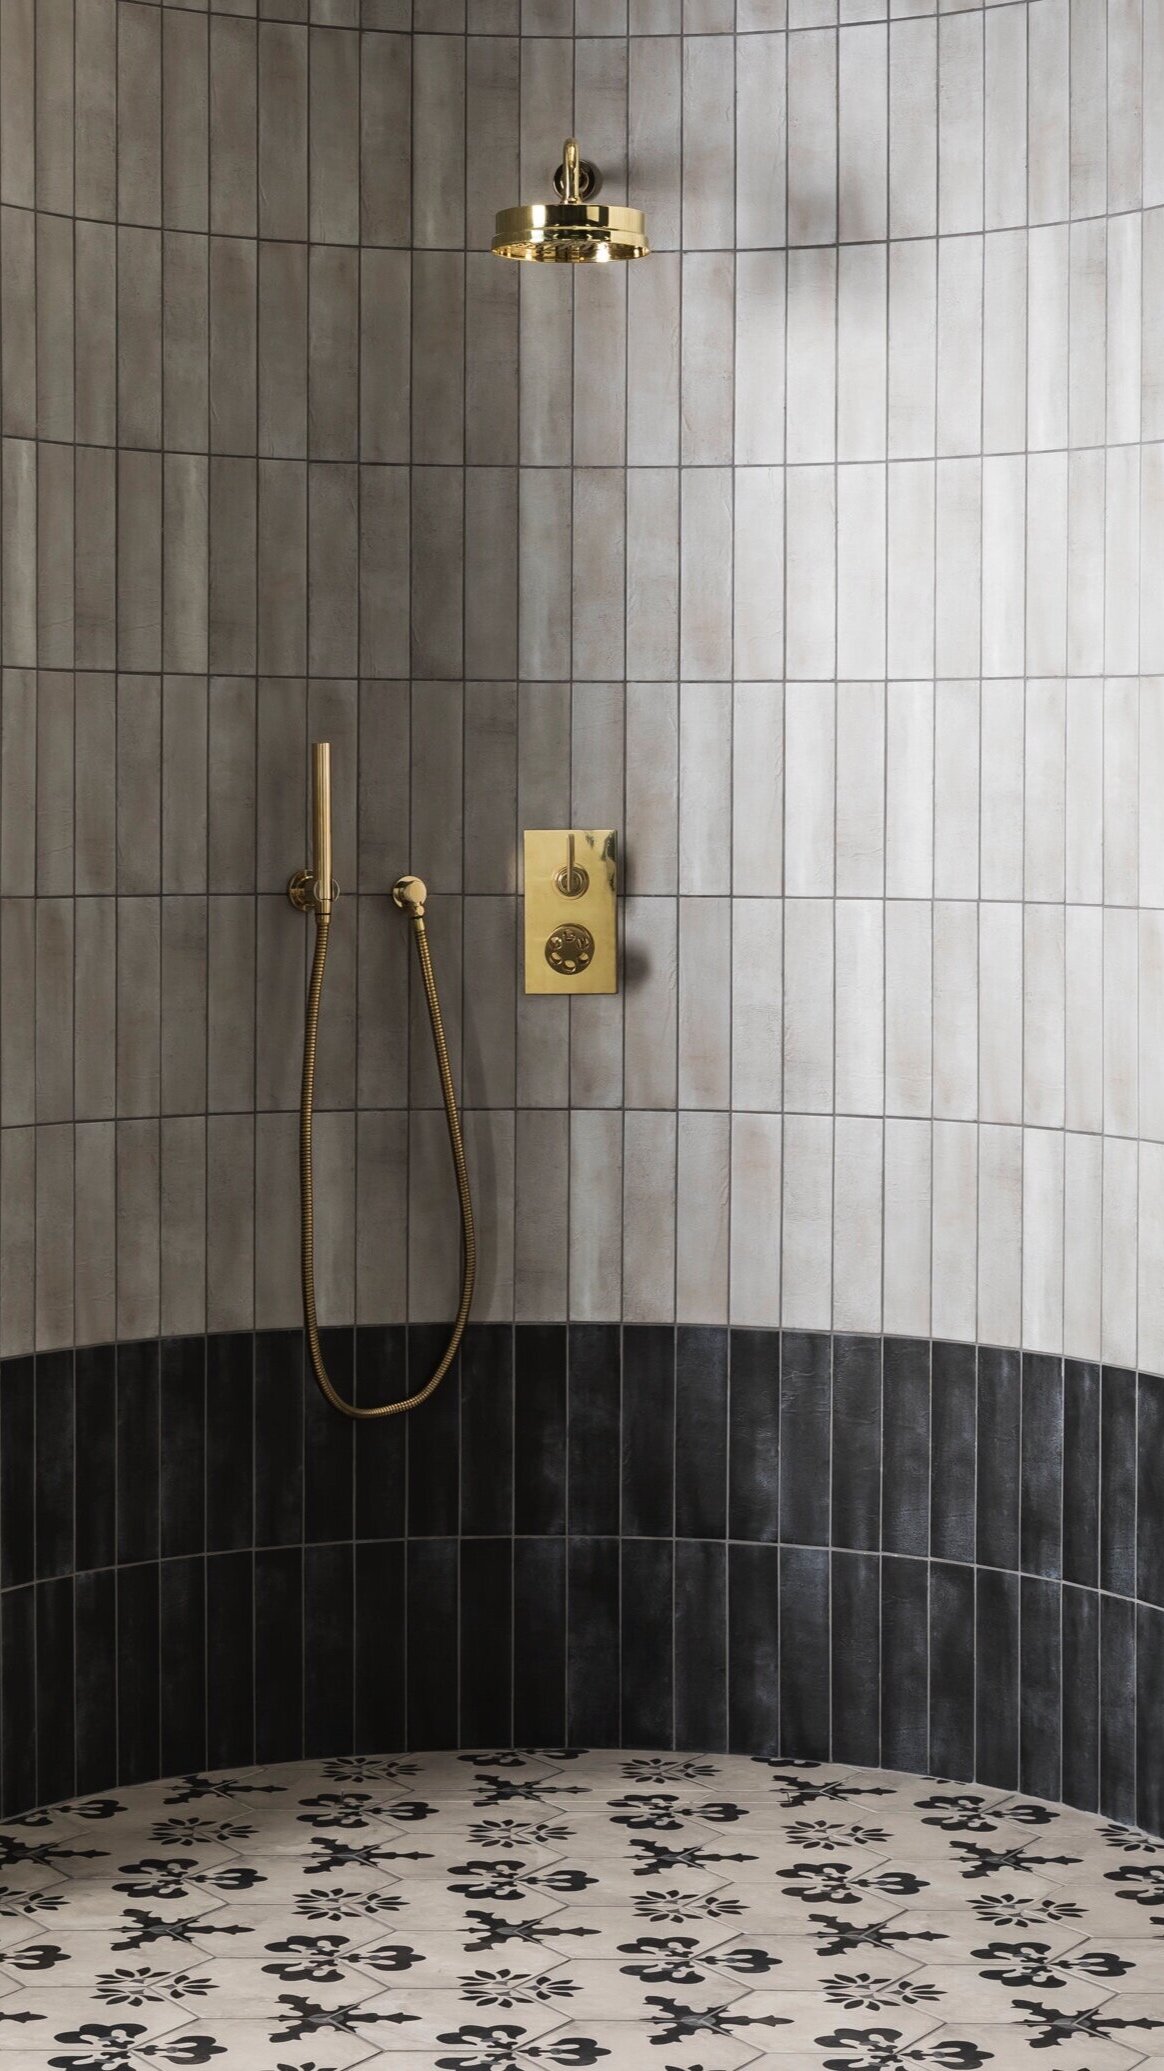 Premium quality brass taps, showers &amp; bathroom fittings